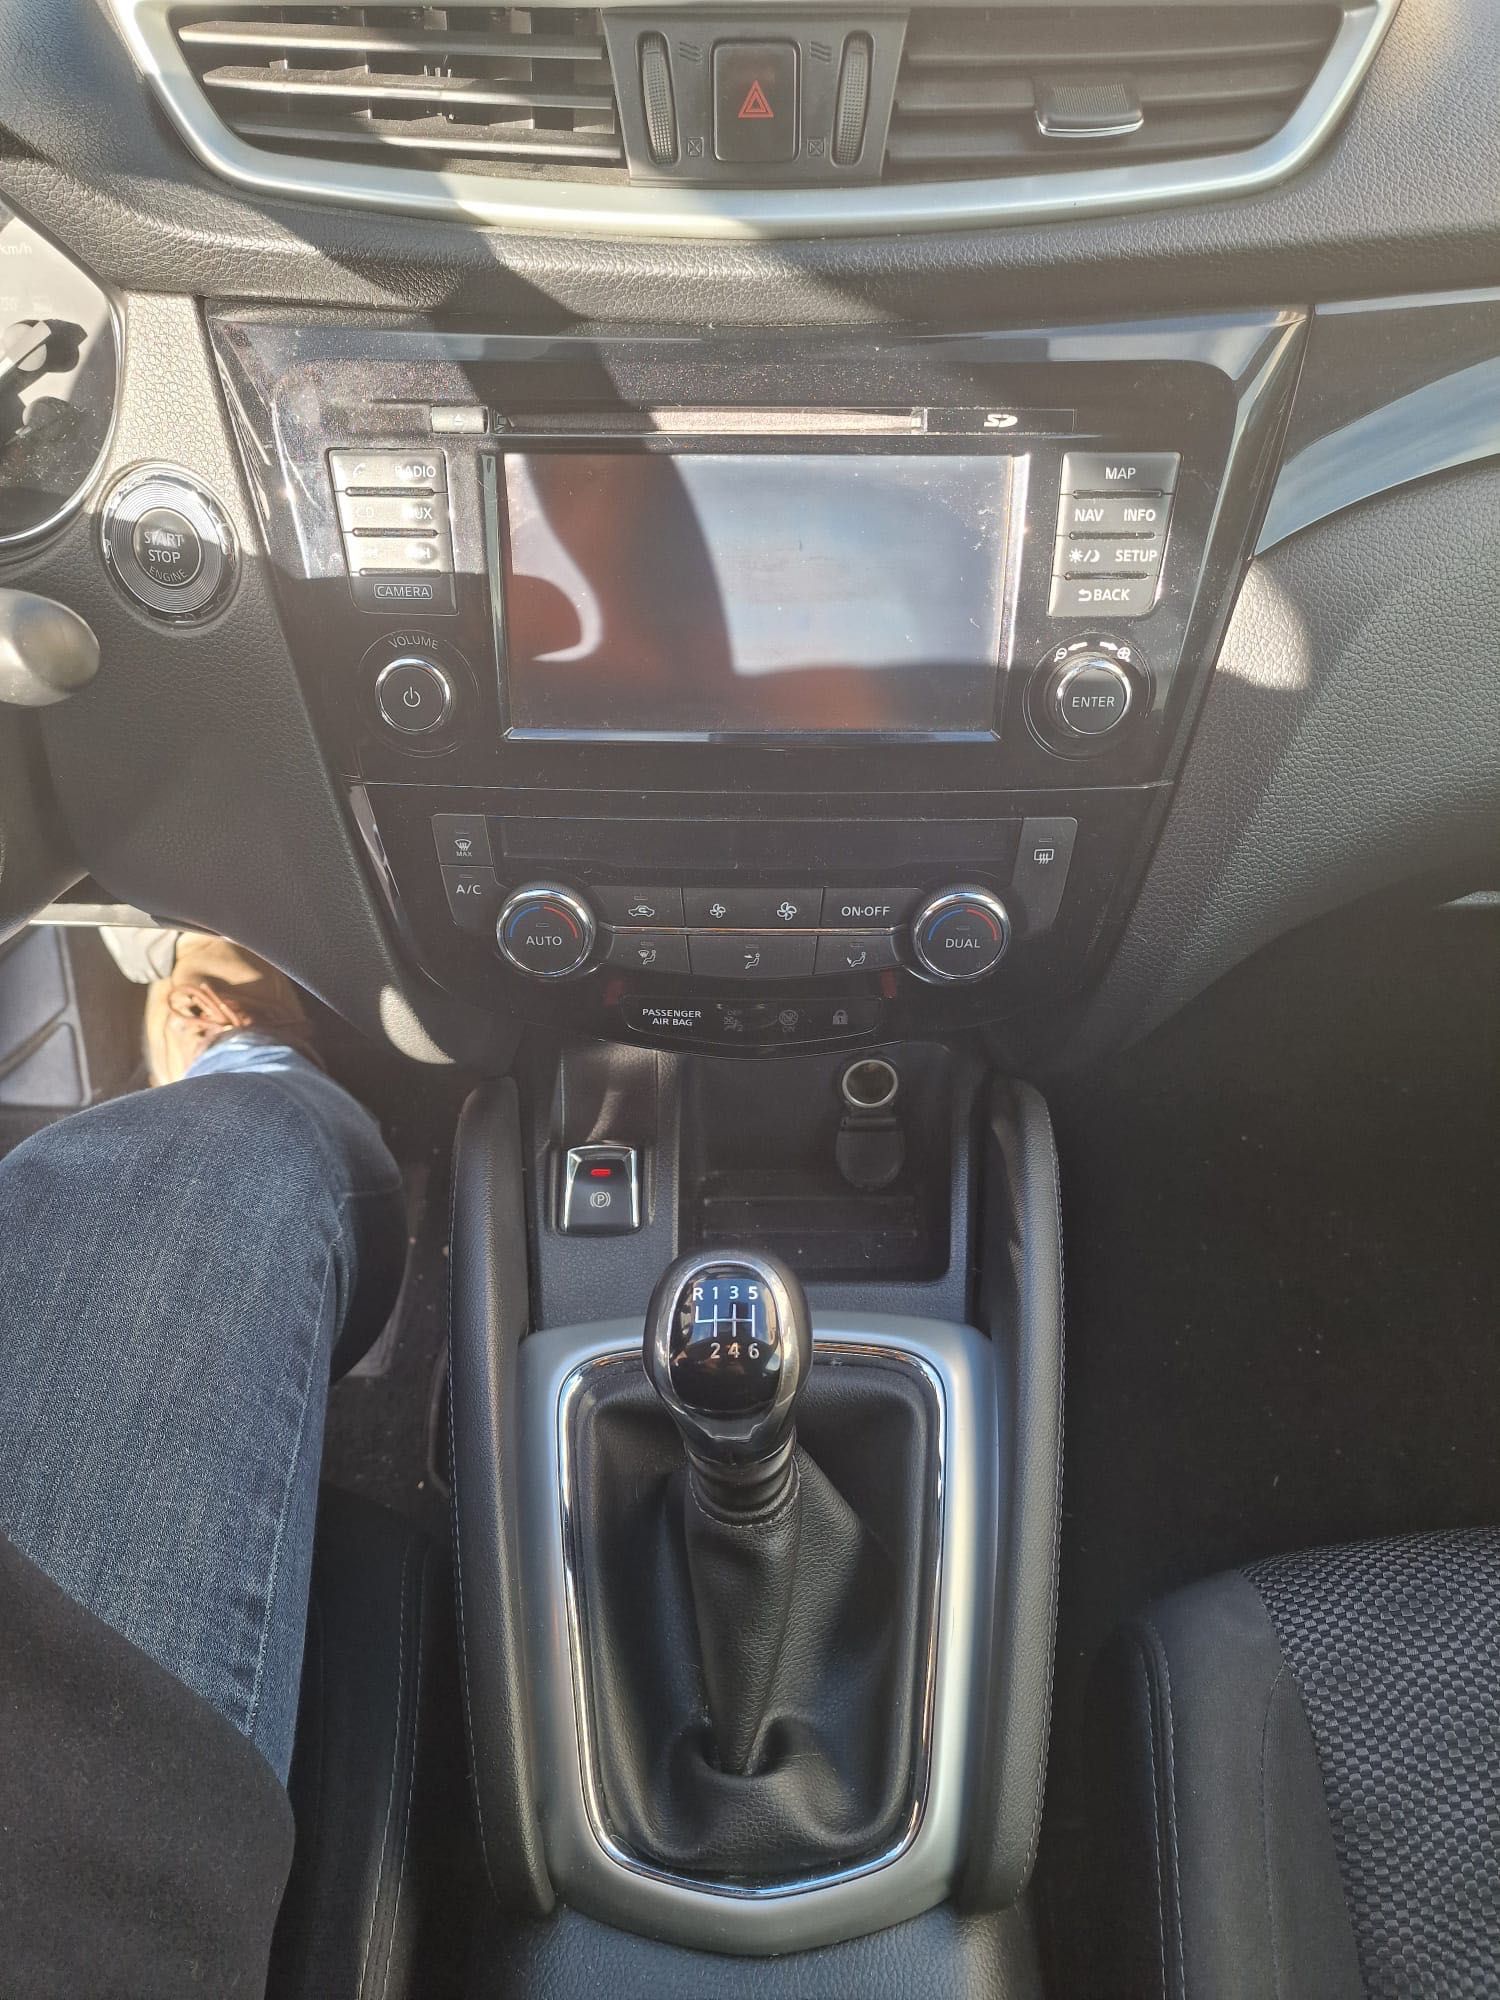 Nissan QASHQAI 2017 connect diesel com teto panorâmico